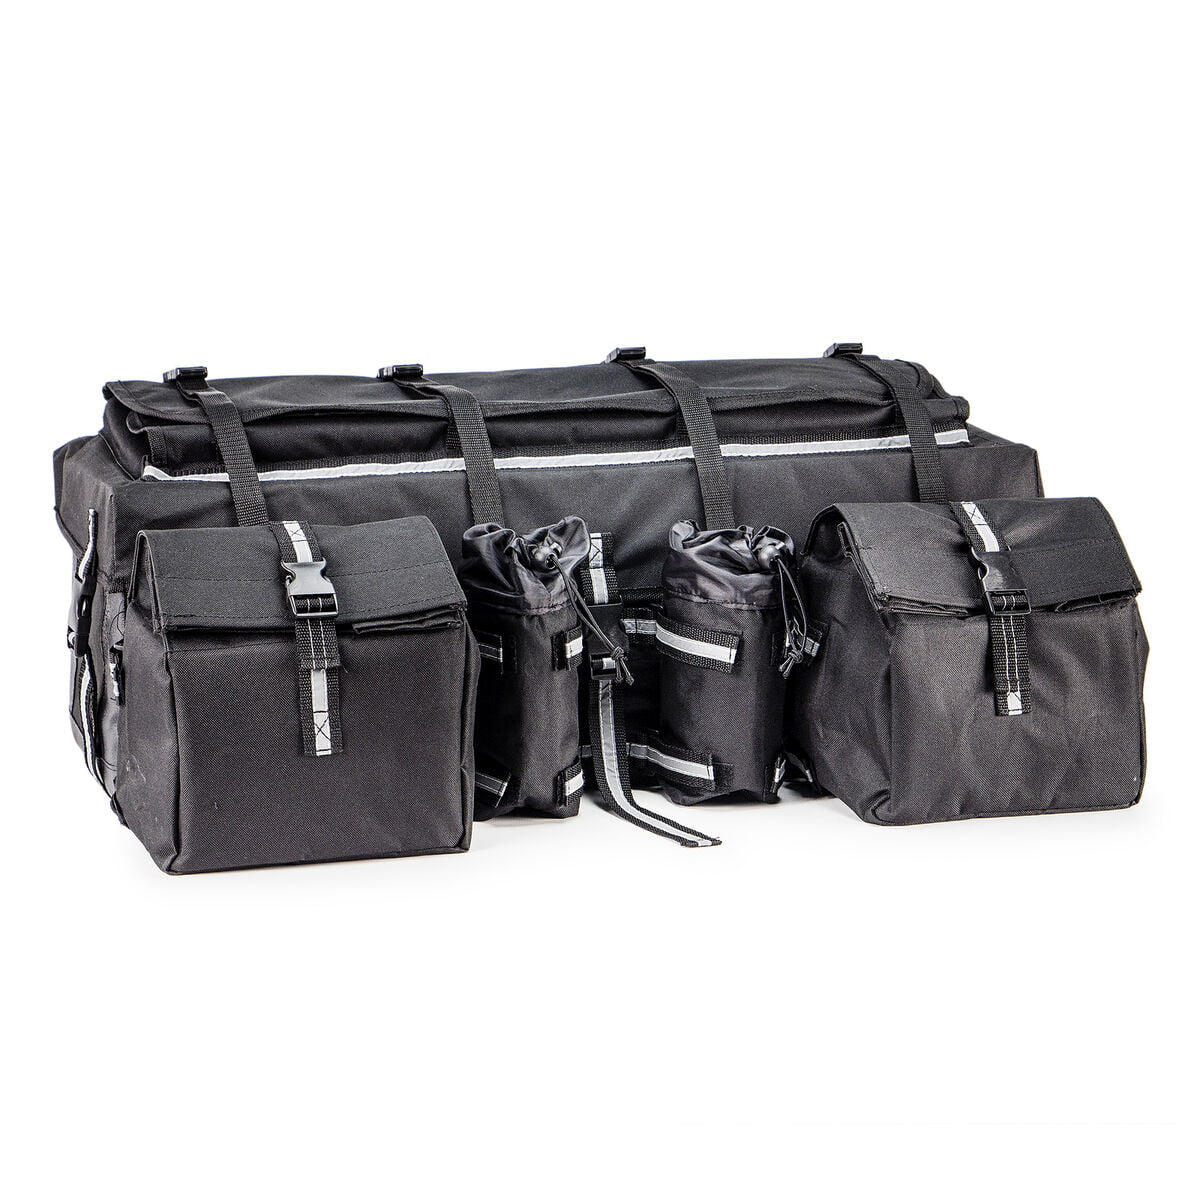 ATV Saddle Bag Gear Bags Snowmobile Bag ATV Rear Rack Bag Luggage Storage Gear Pack for Motocross Snowmobile 